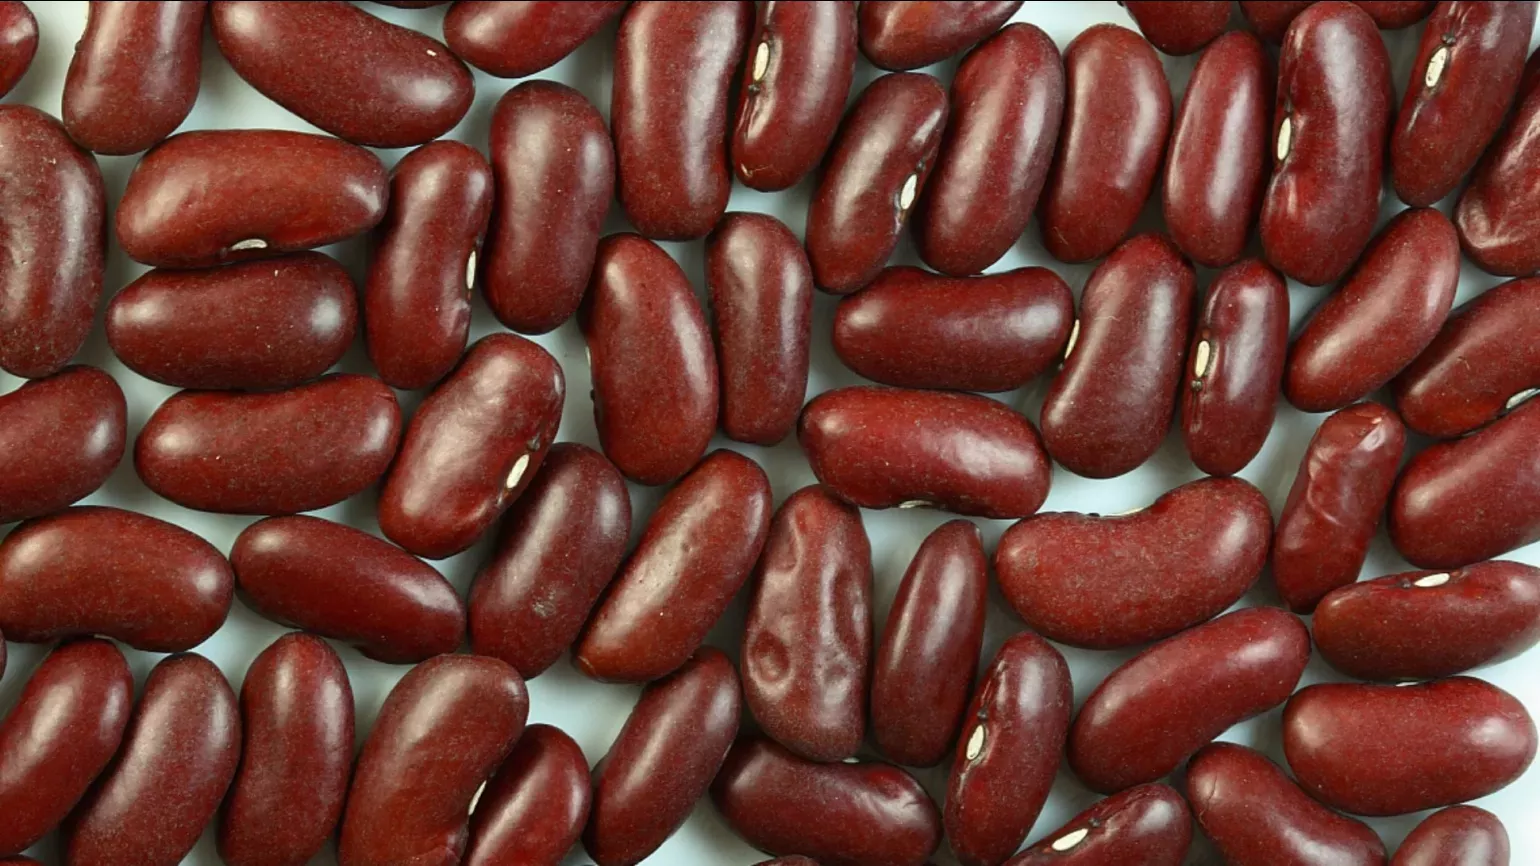 Many dark read kidney shaped kidney beans